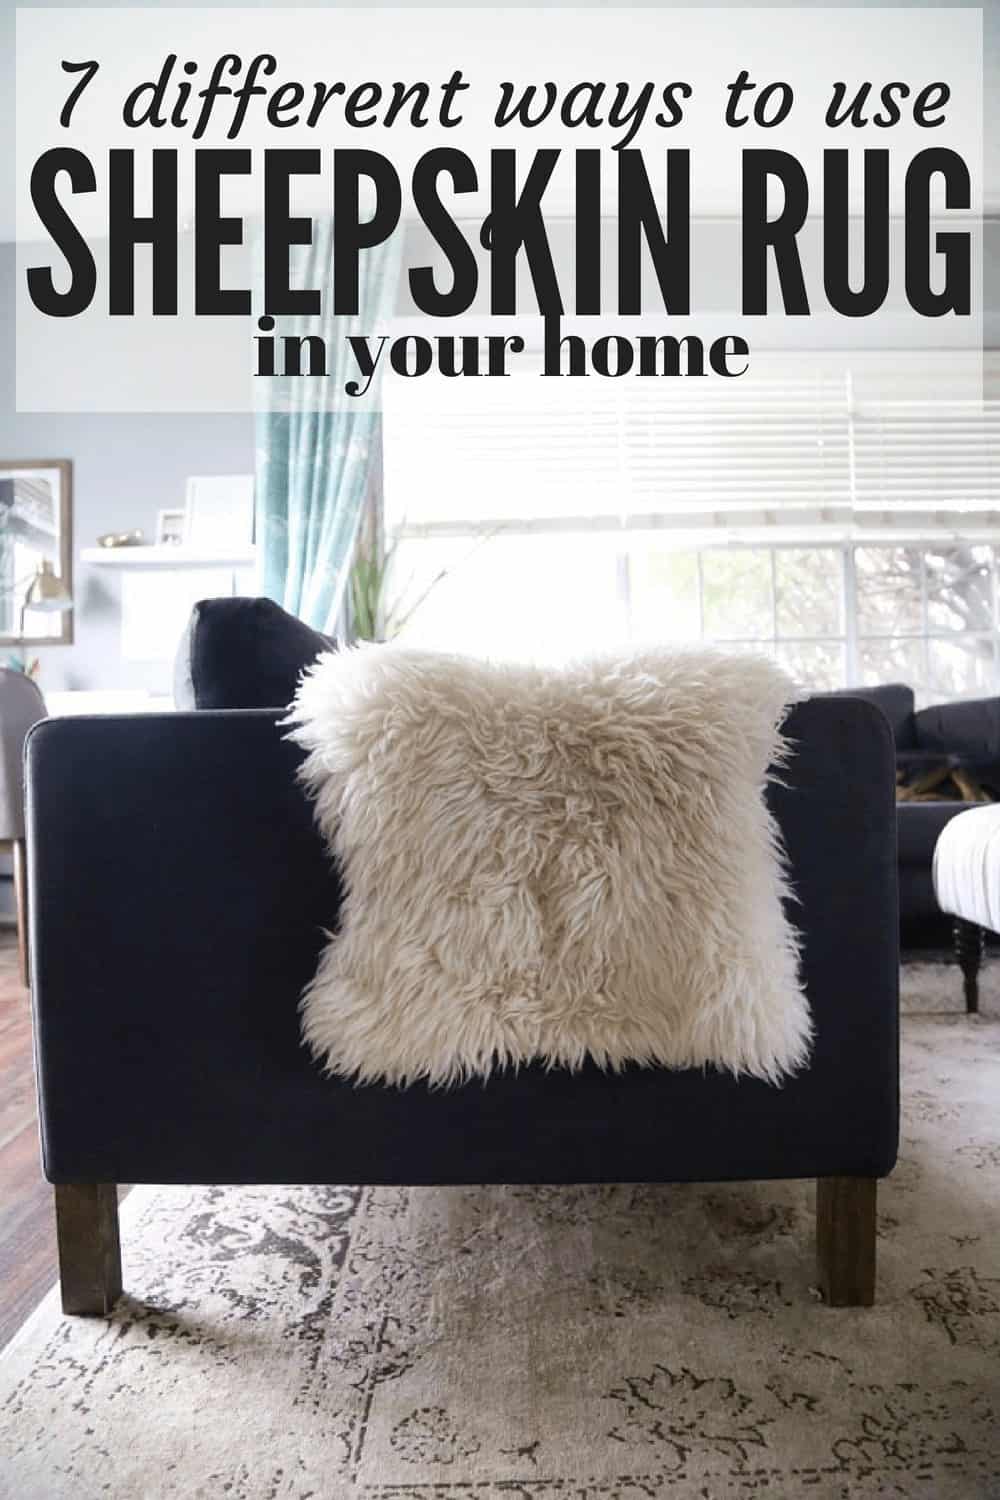 Sheepskin rug uses